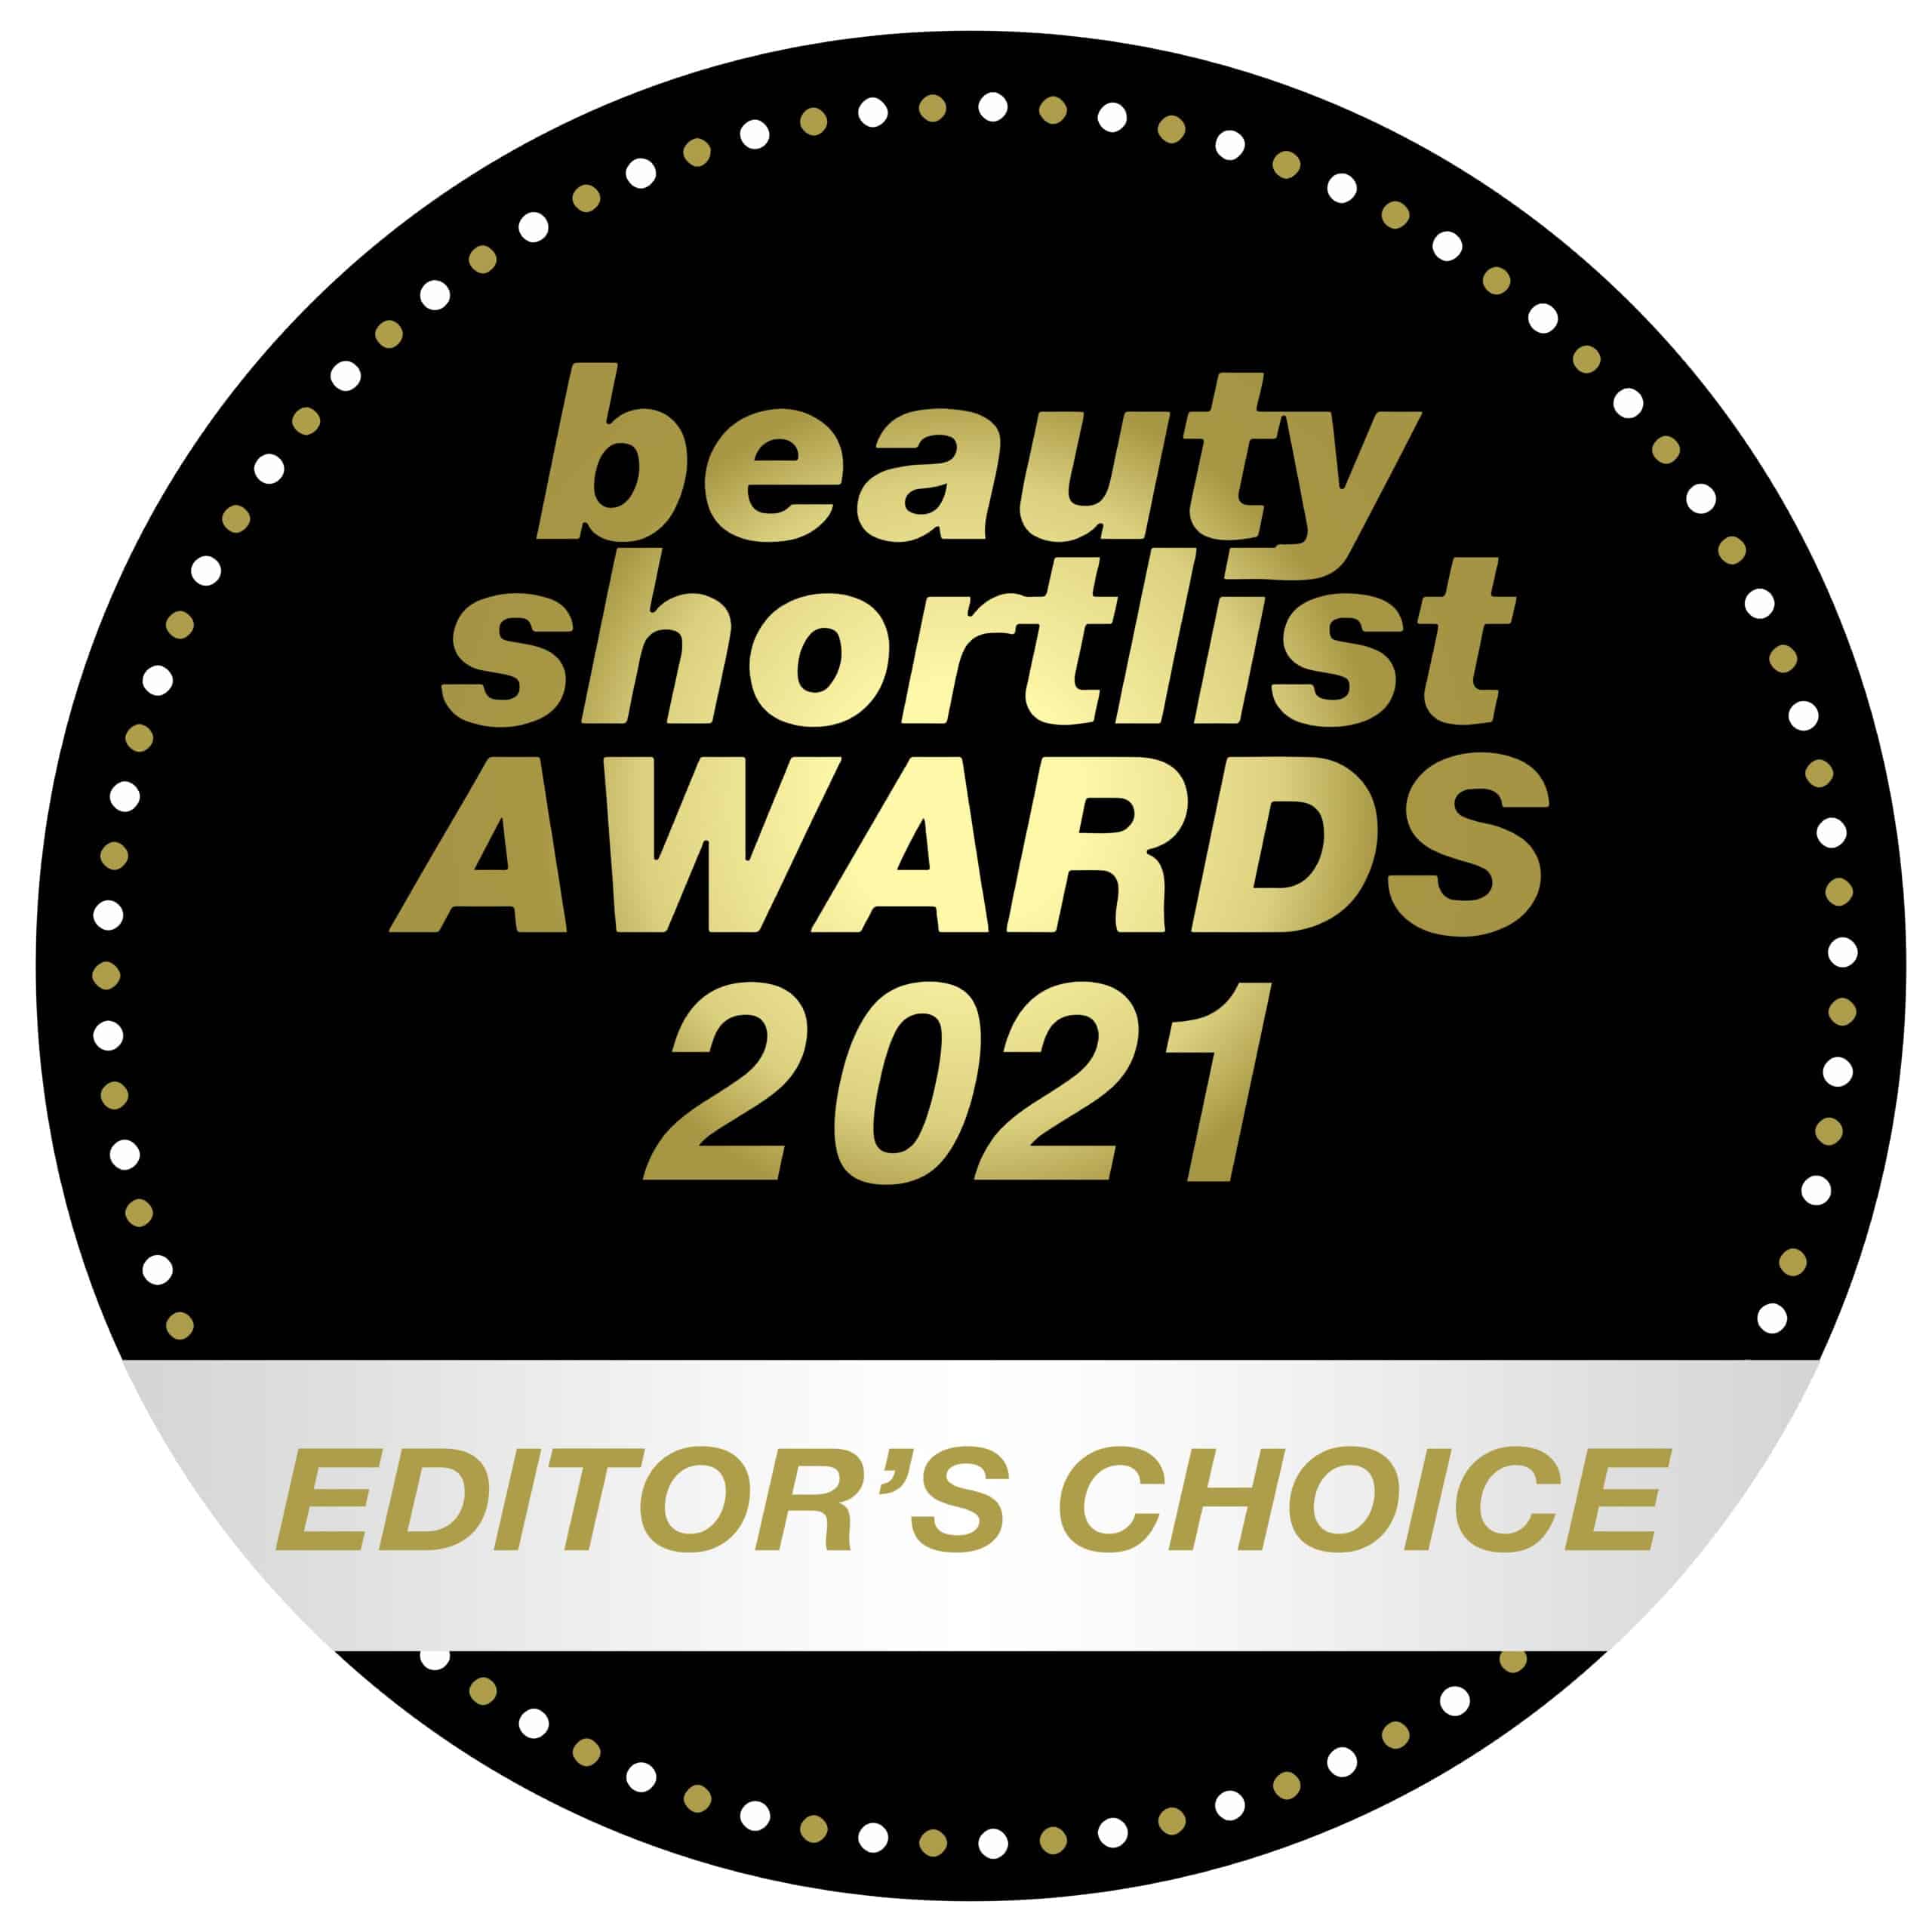 beauty shortlist awards 2021 editor's choice